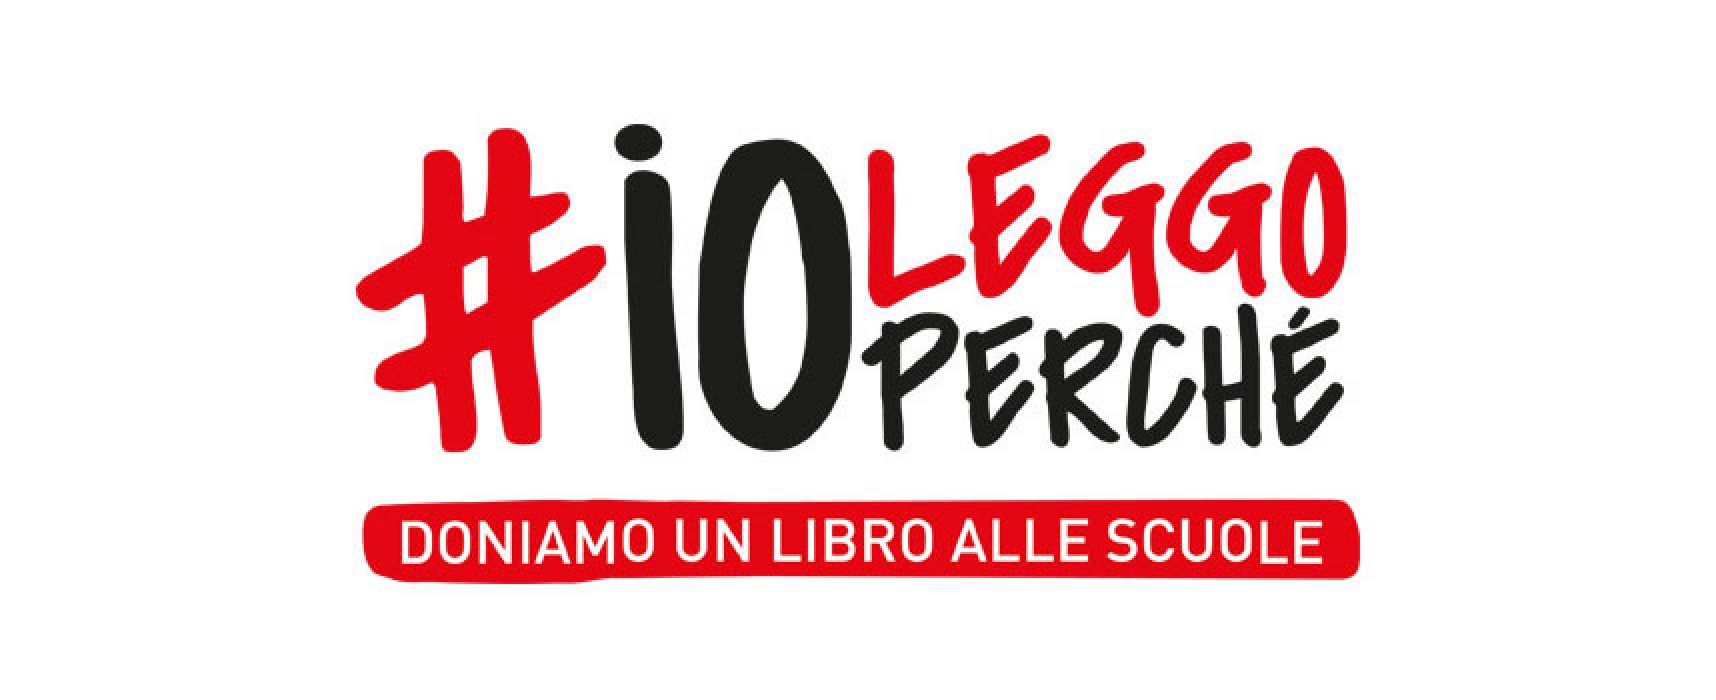 L’Istituto “Sergio Cosmai” partecipa all’iniziativa #ioleggoperchè